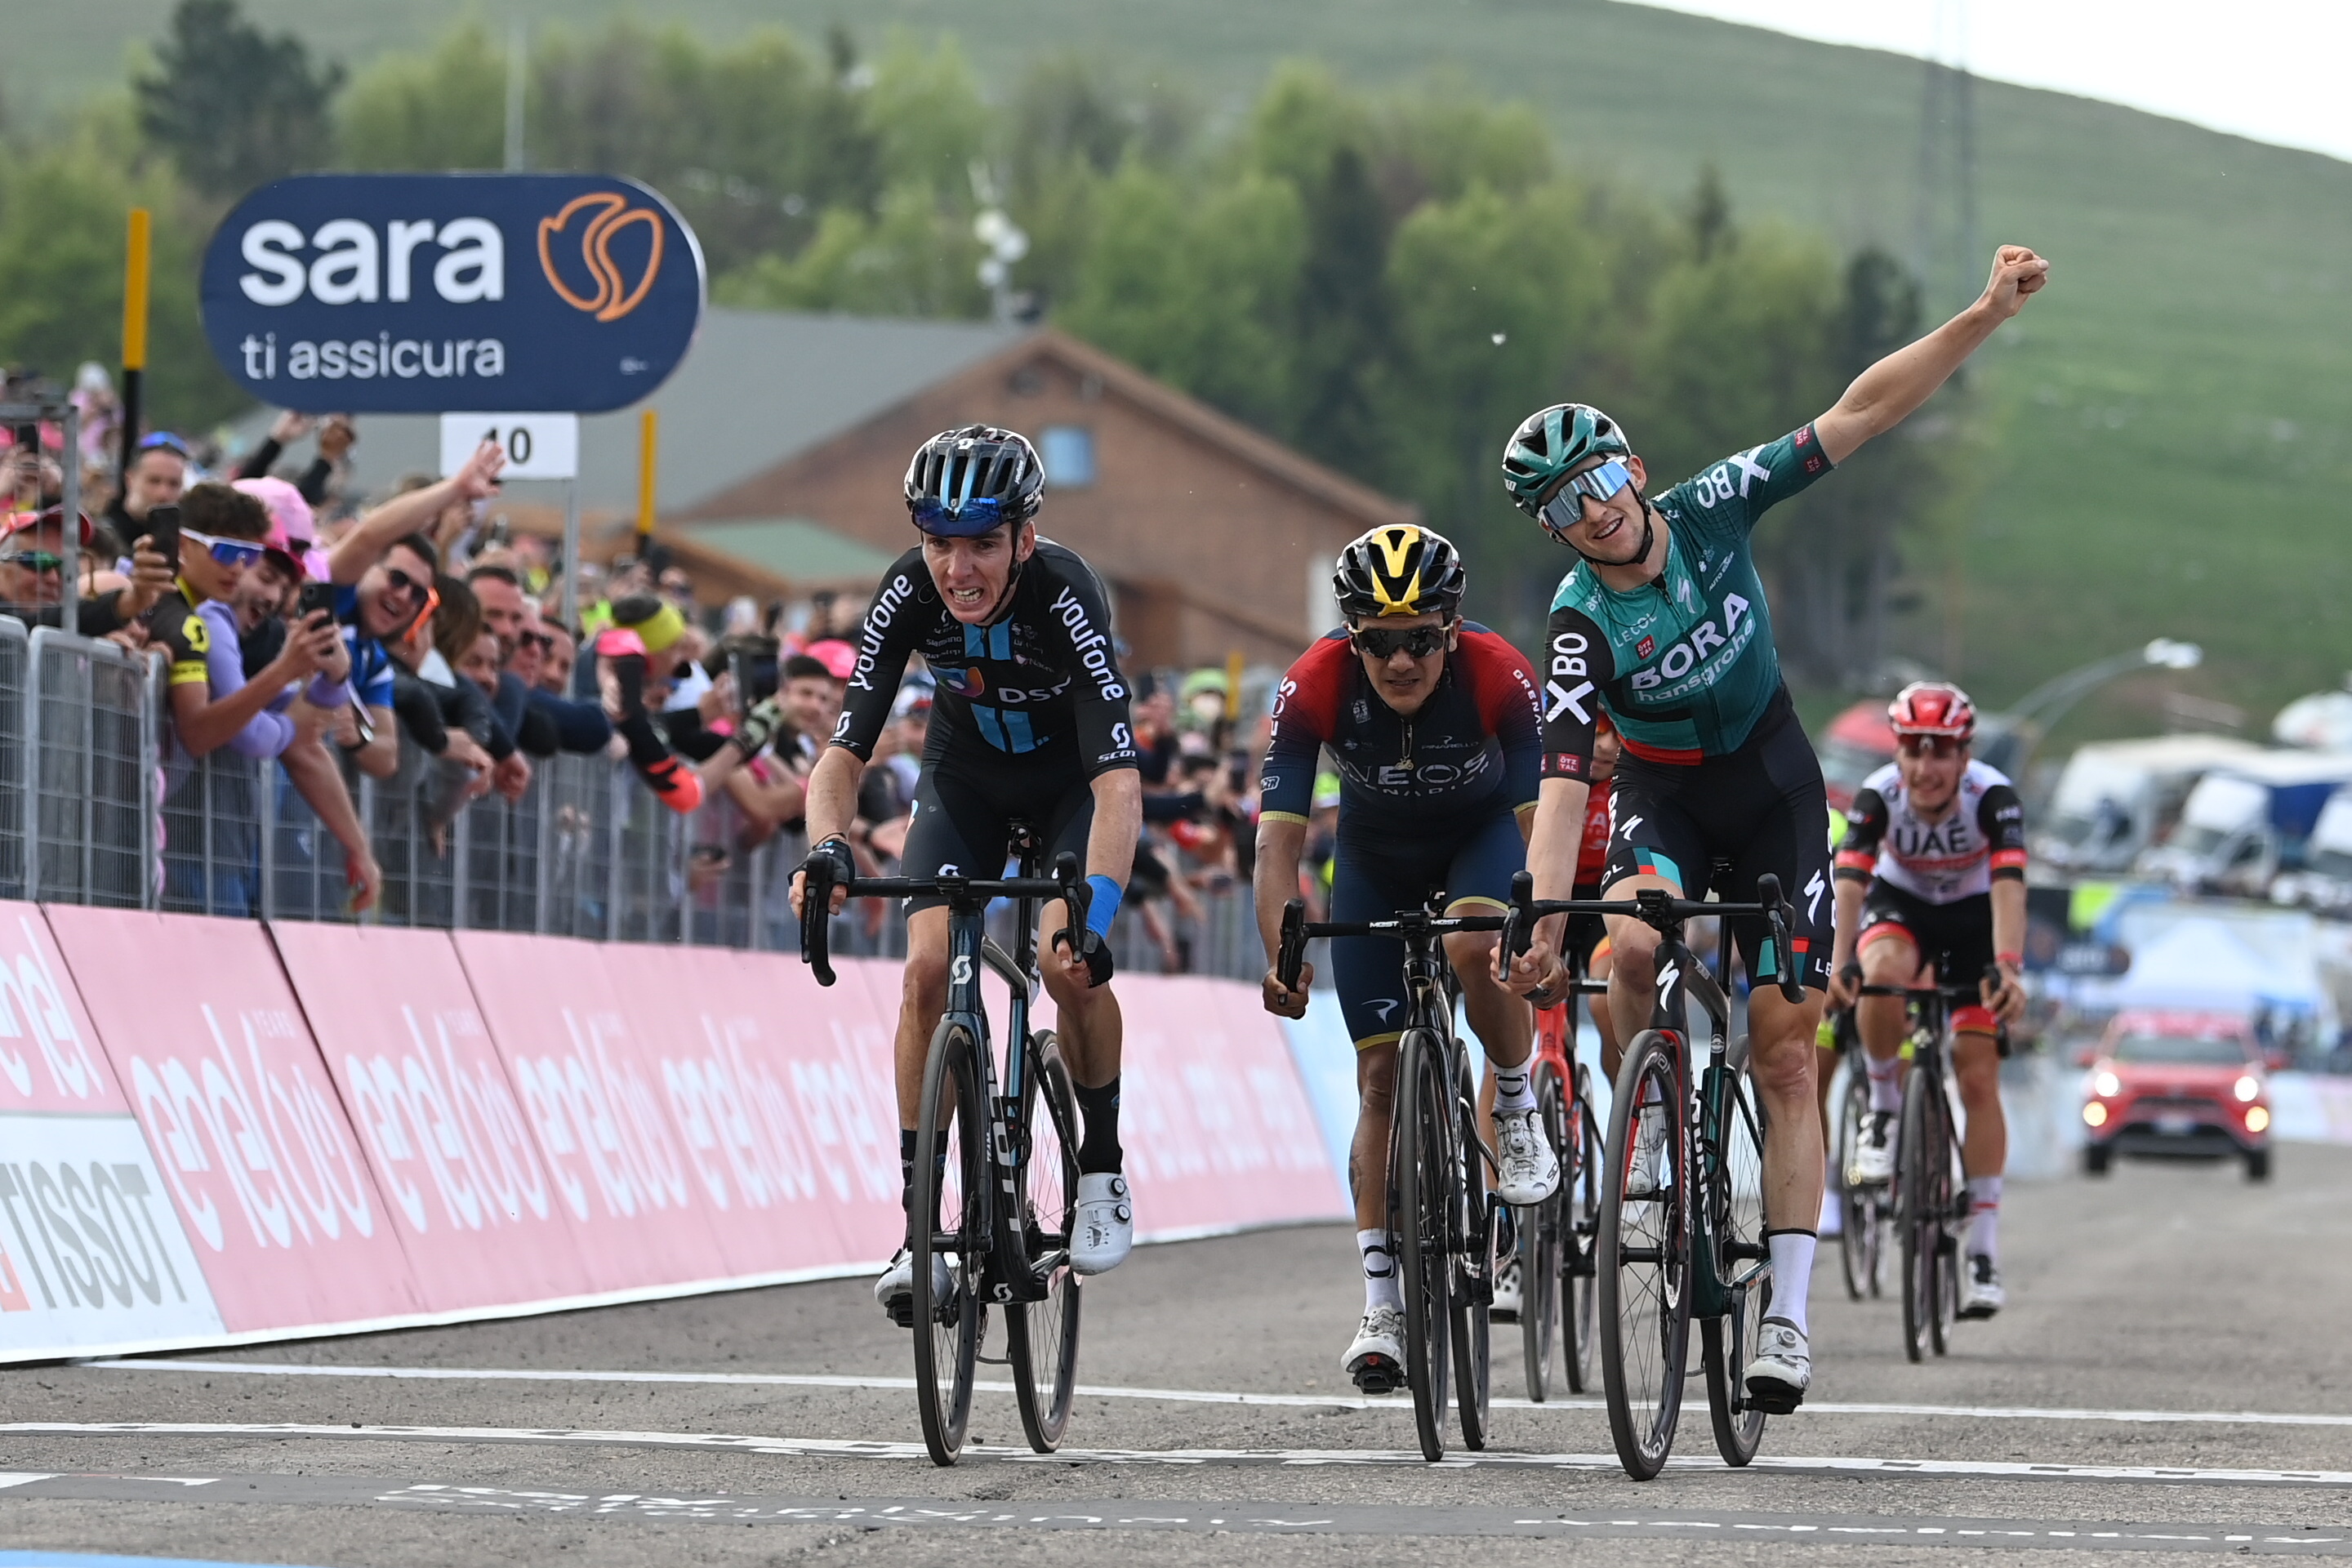 Jai Hindley (der.) superó en el sprint decisivo a Richard Carapaz (cen.) y Romain Bardet (izq.) en la etapa 9 del Giro de Italia 2022. Foto: Twitter @giroditalia